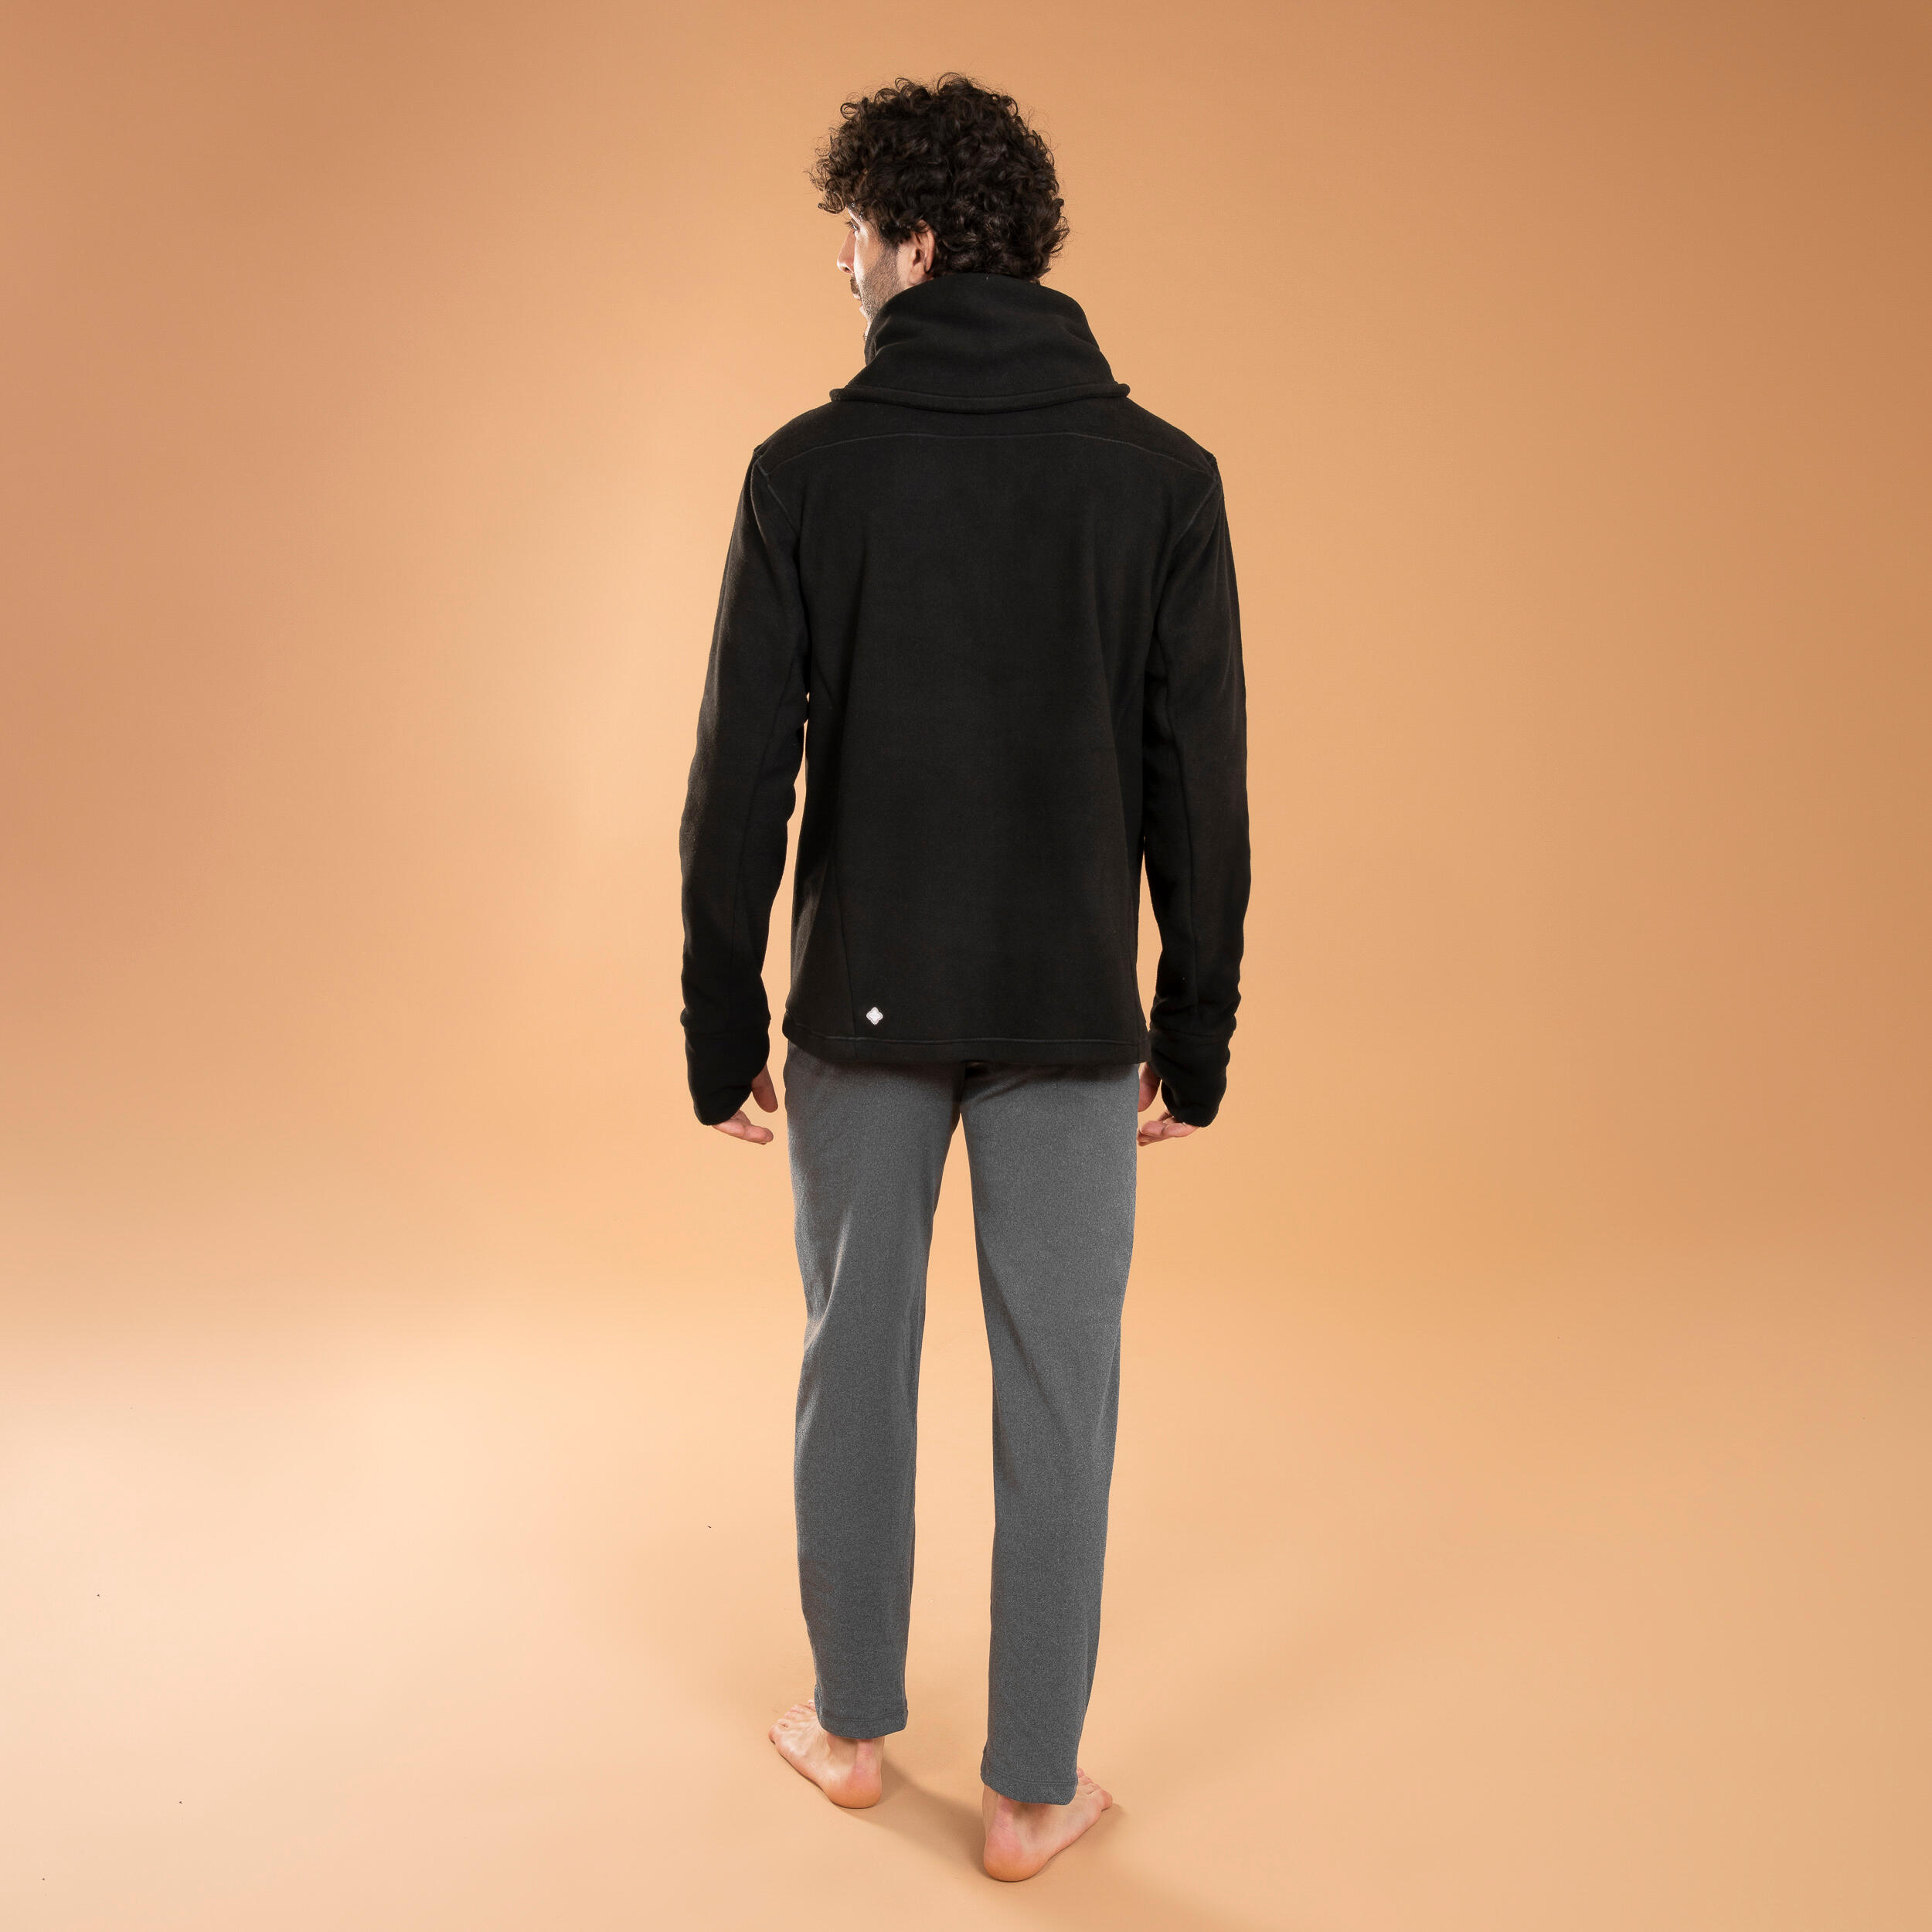 Men's Gentle Yoga Warm Sweatshirt - Mottled Black 5/6